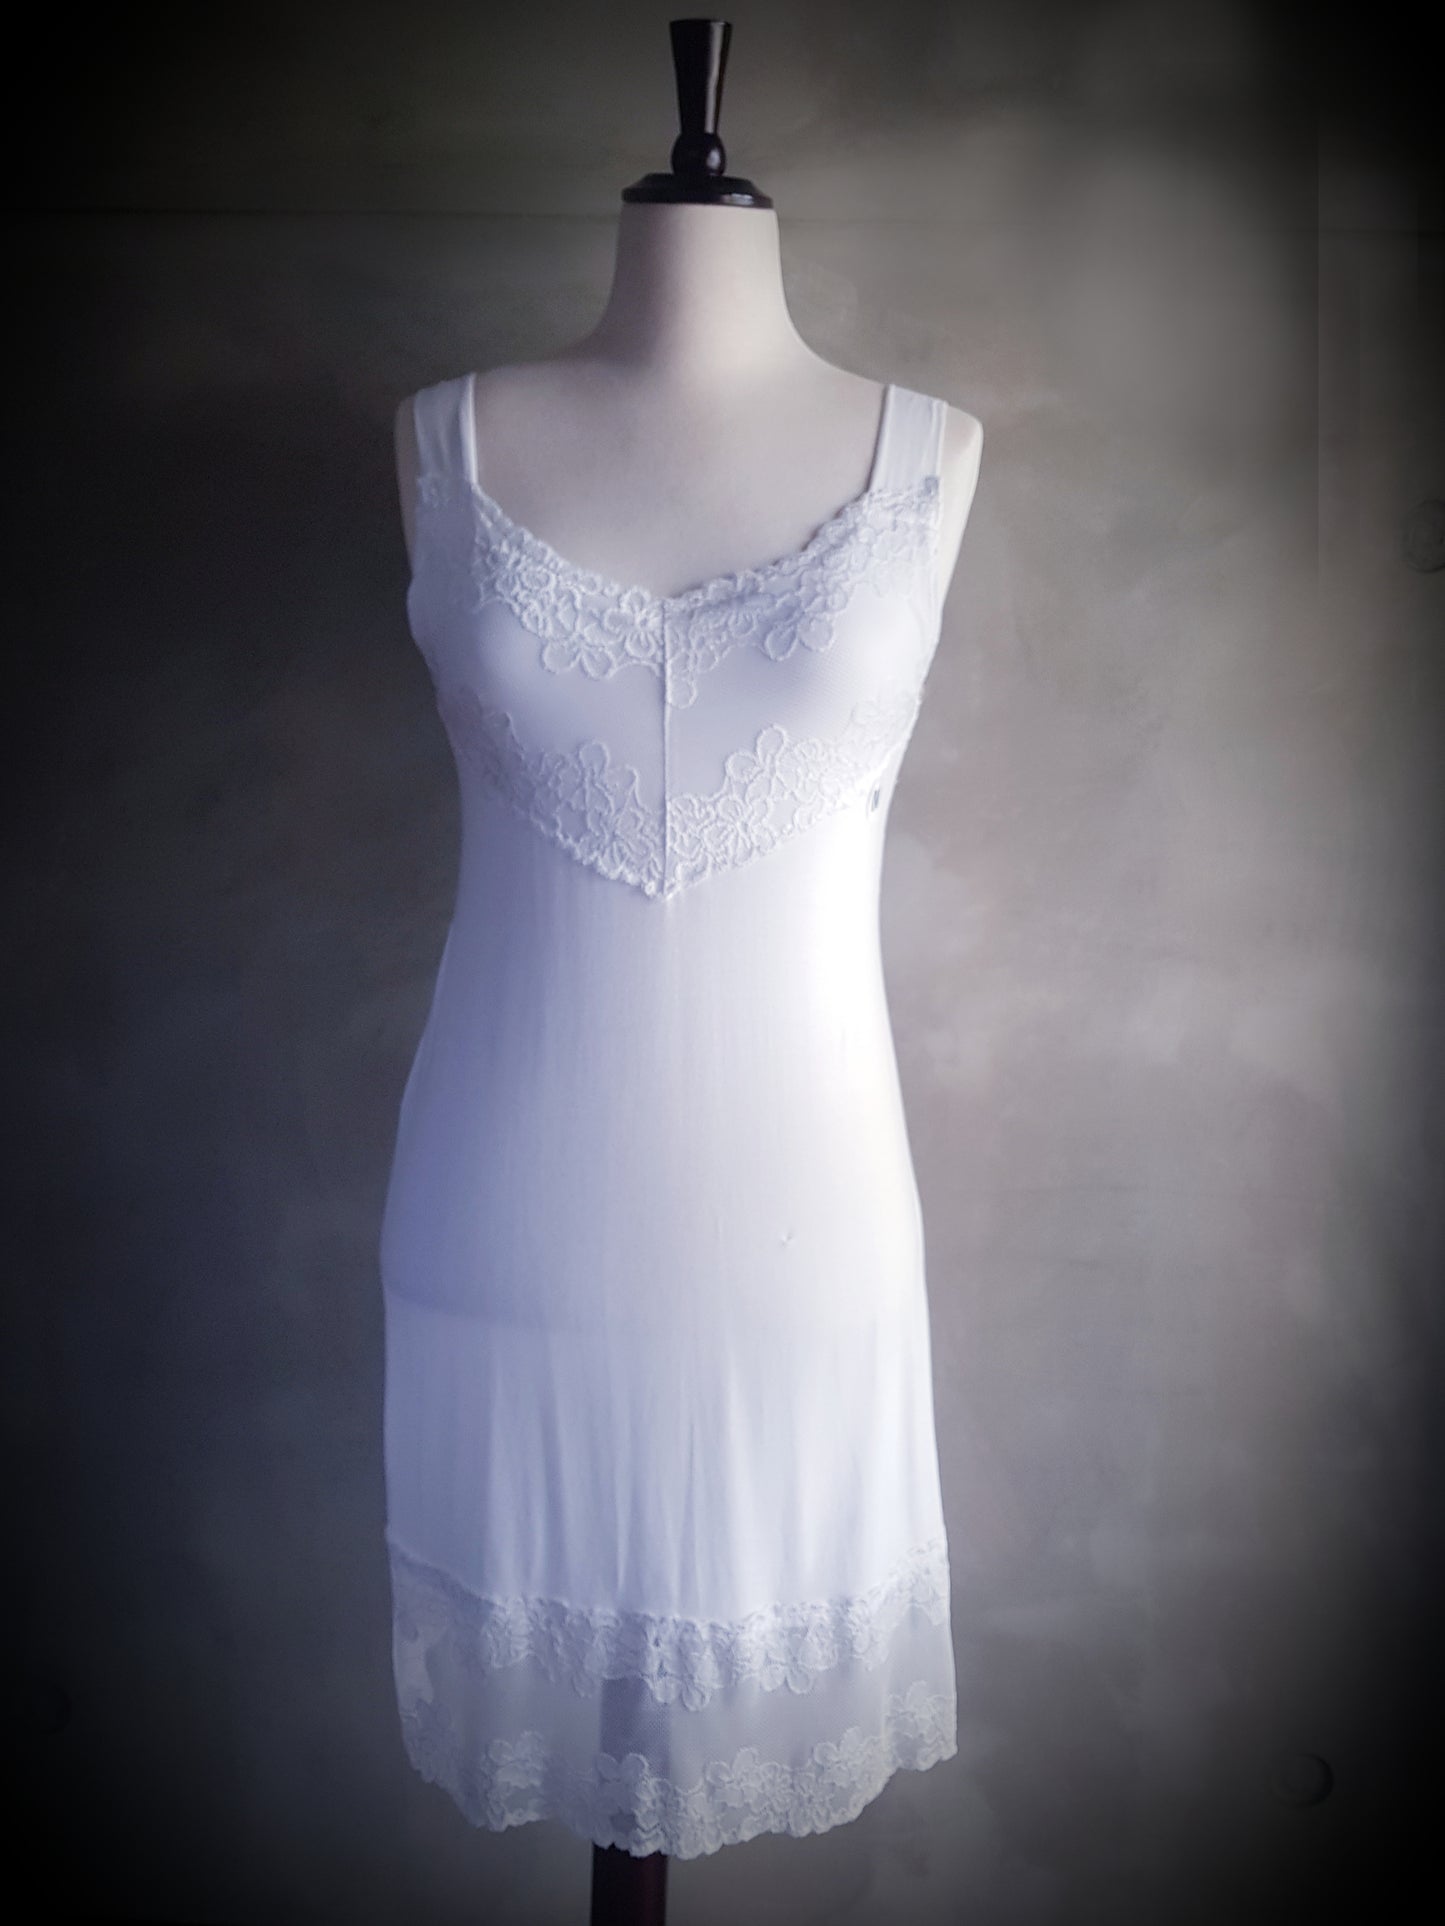 Reversible Cami Dress in White